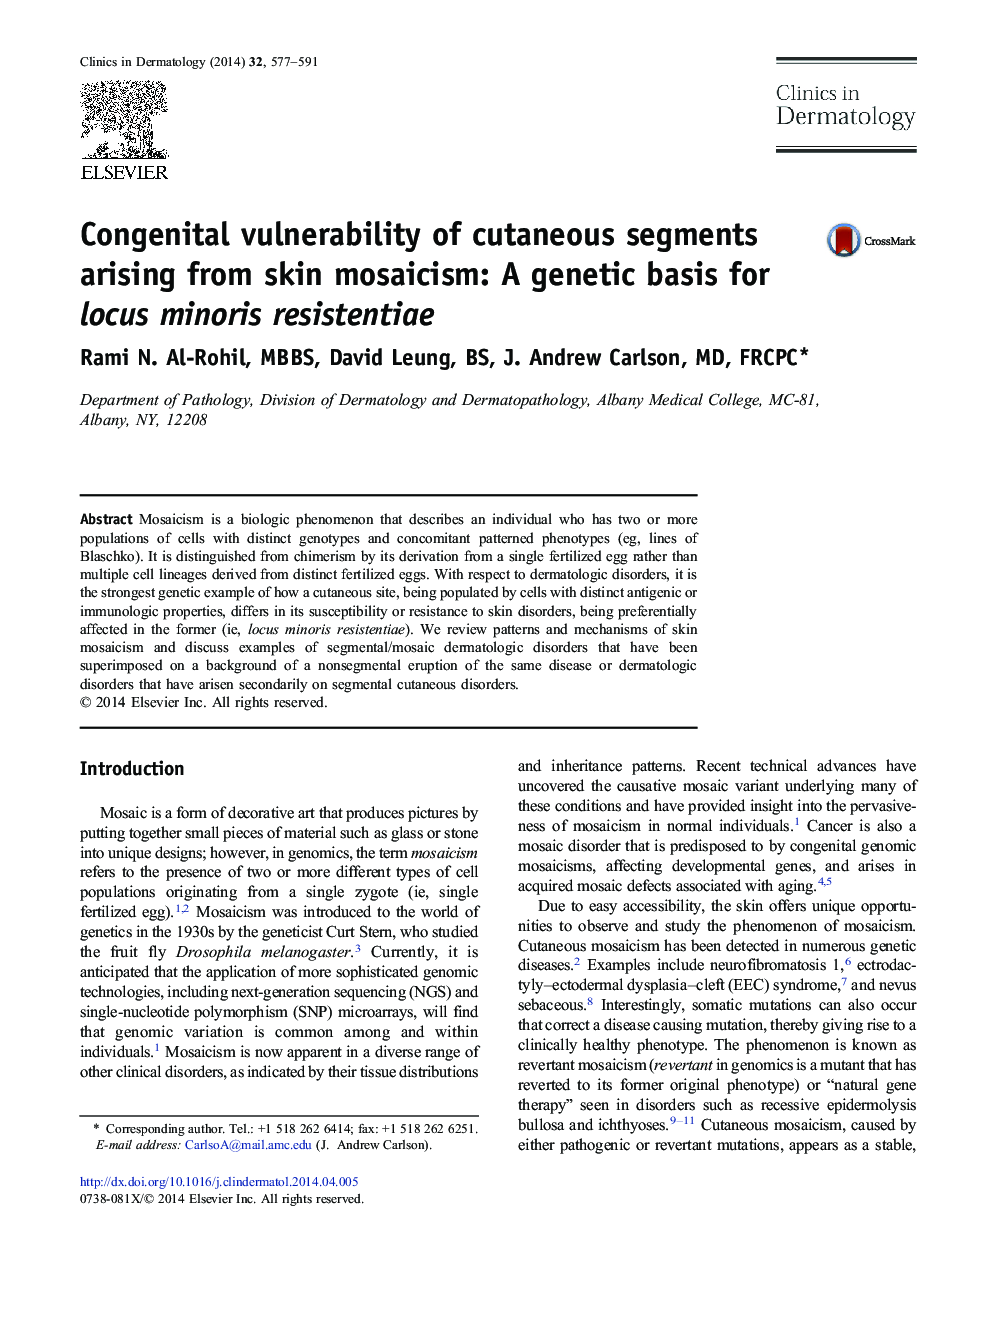 Congenital vulnerability of cutaneous segments arising from skin mosaicism: A genetic basis for locus minoris resistentiae